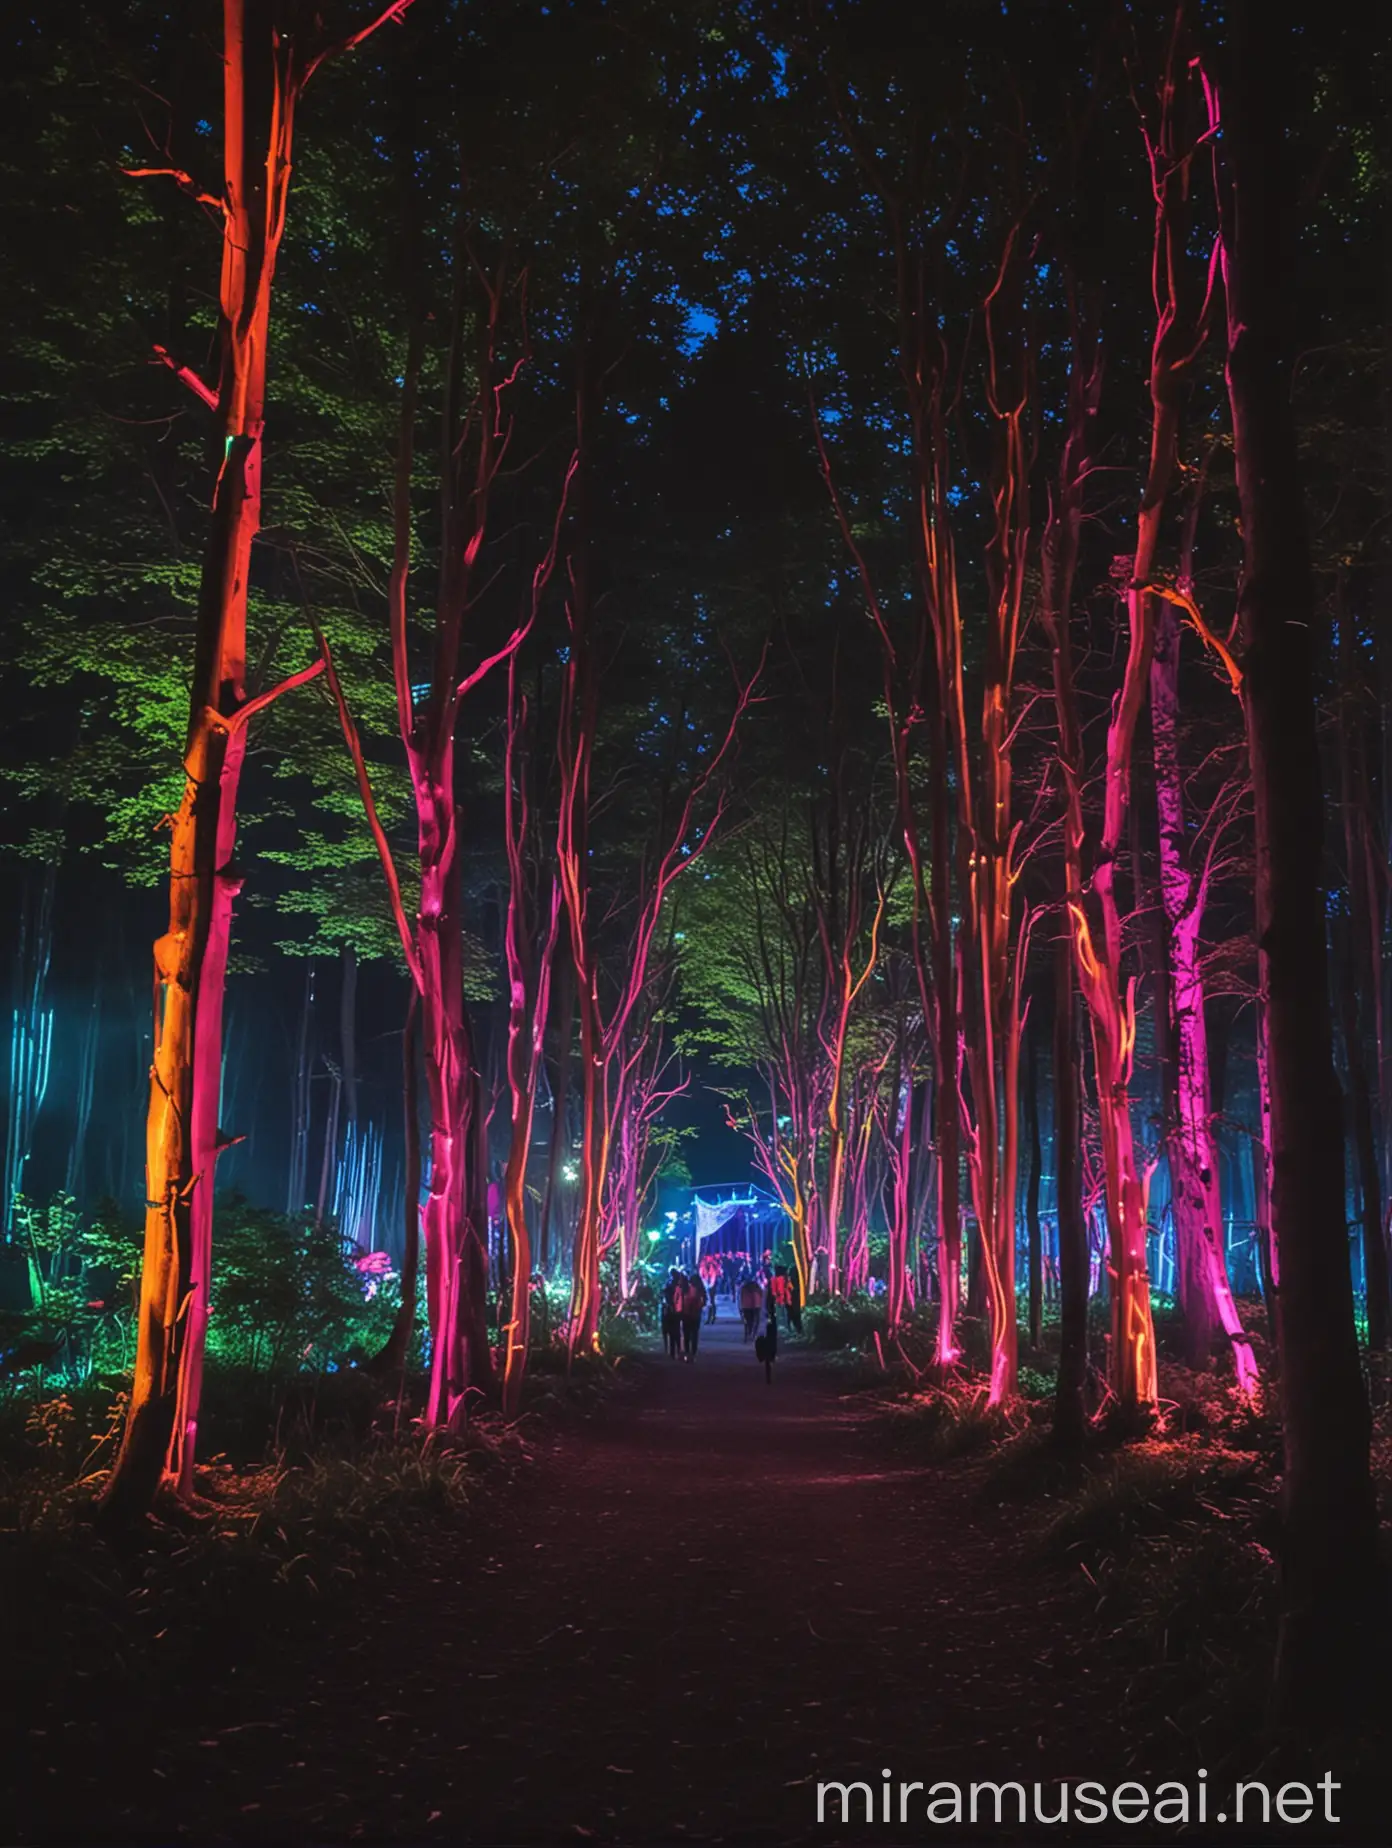 waldfest festival bäume neon

nacht